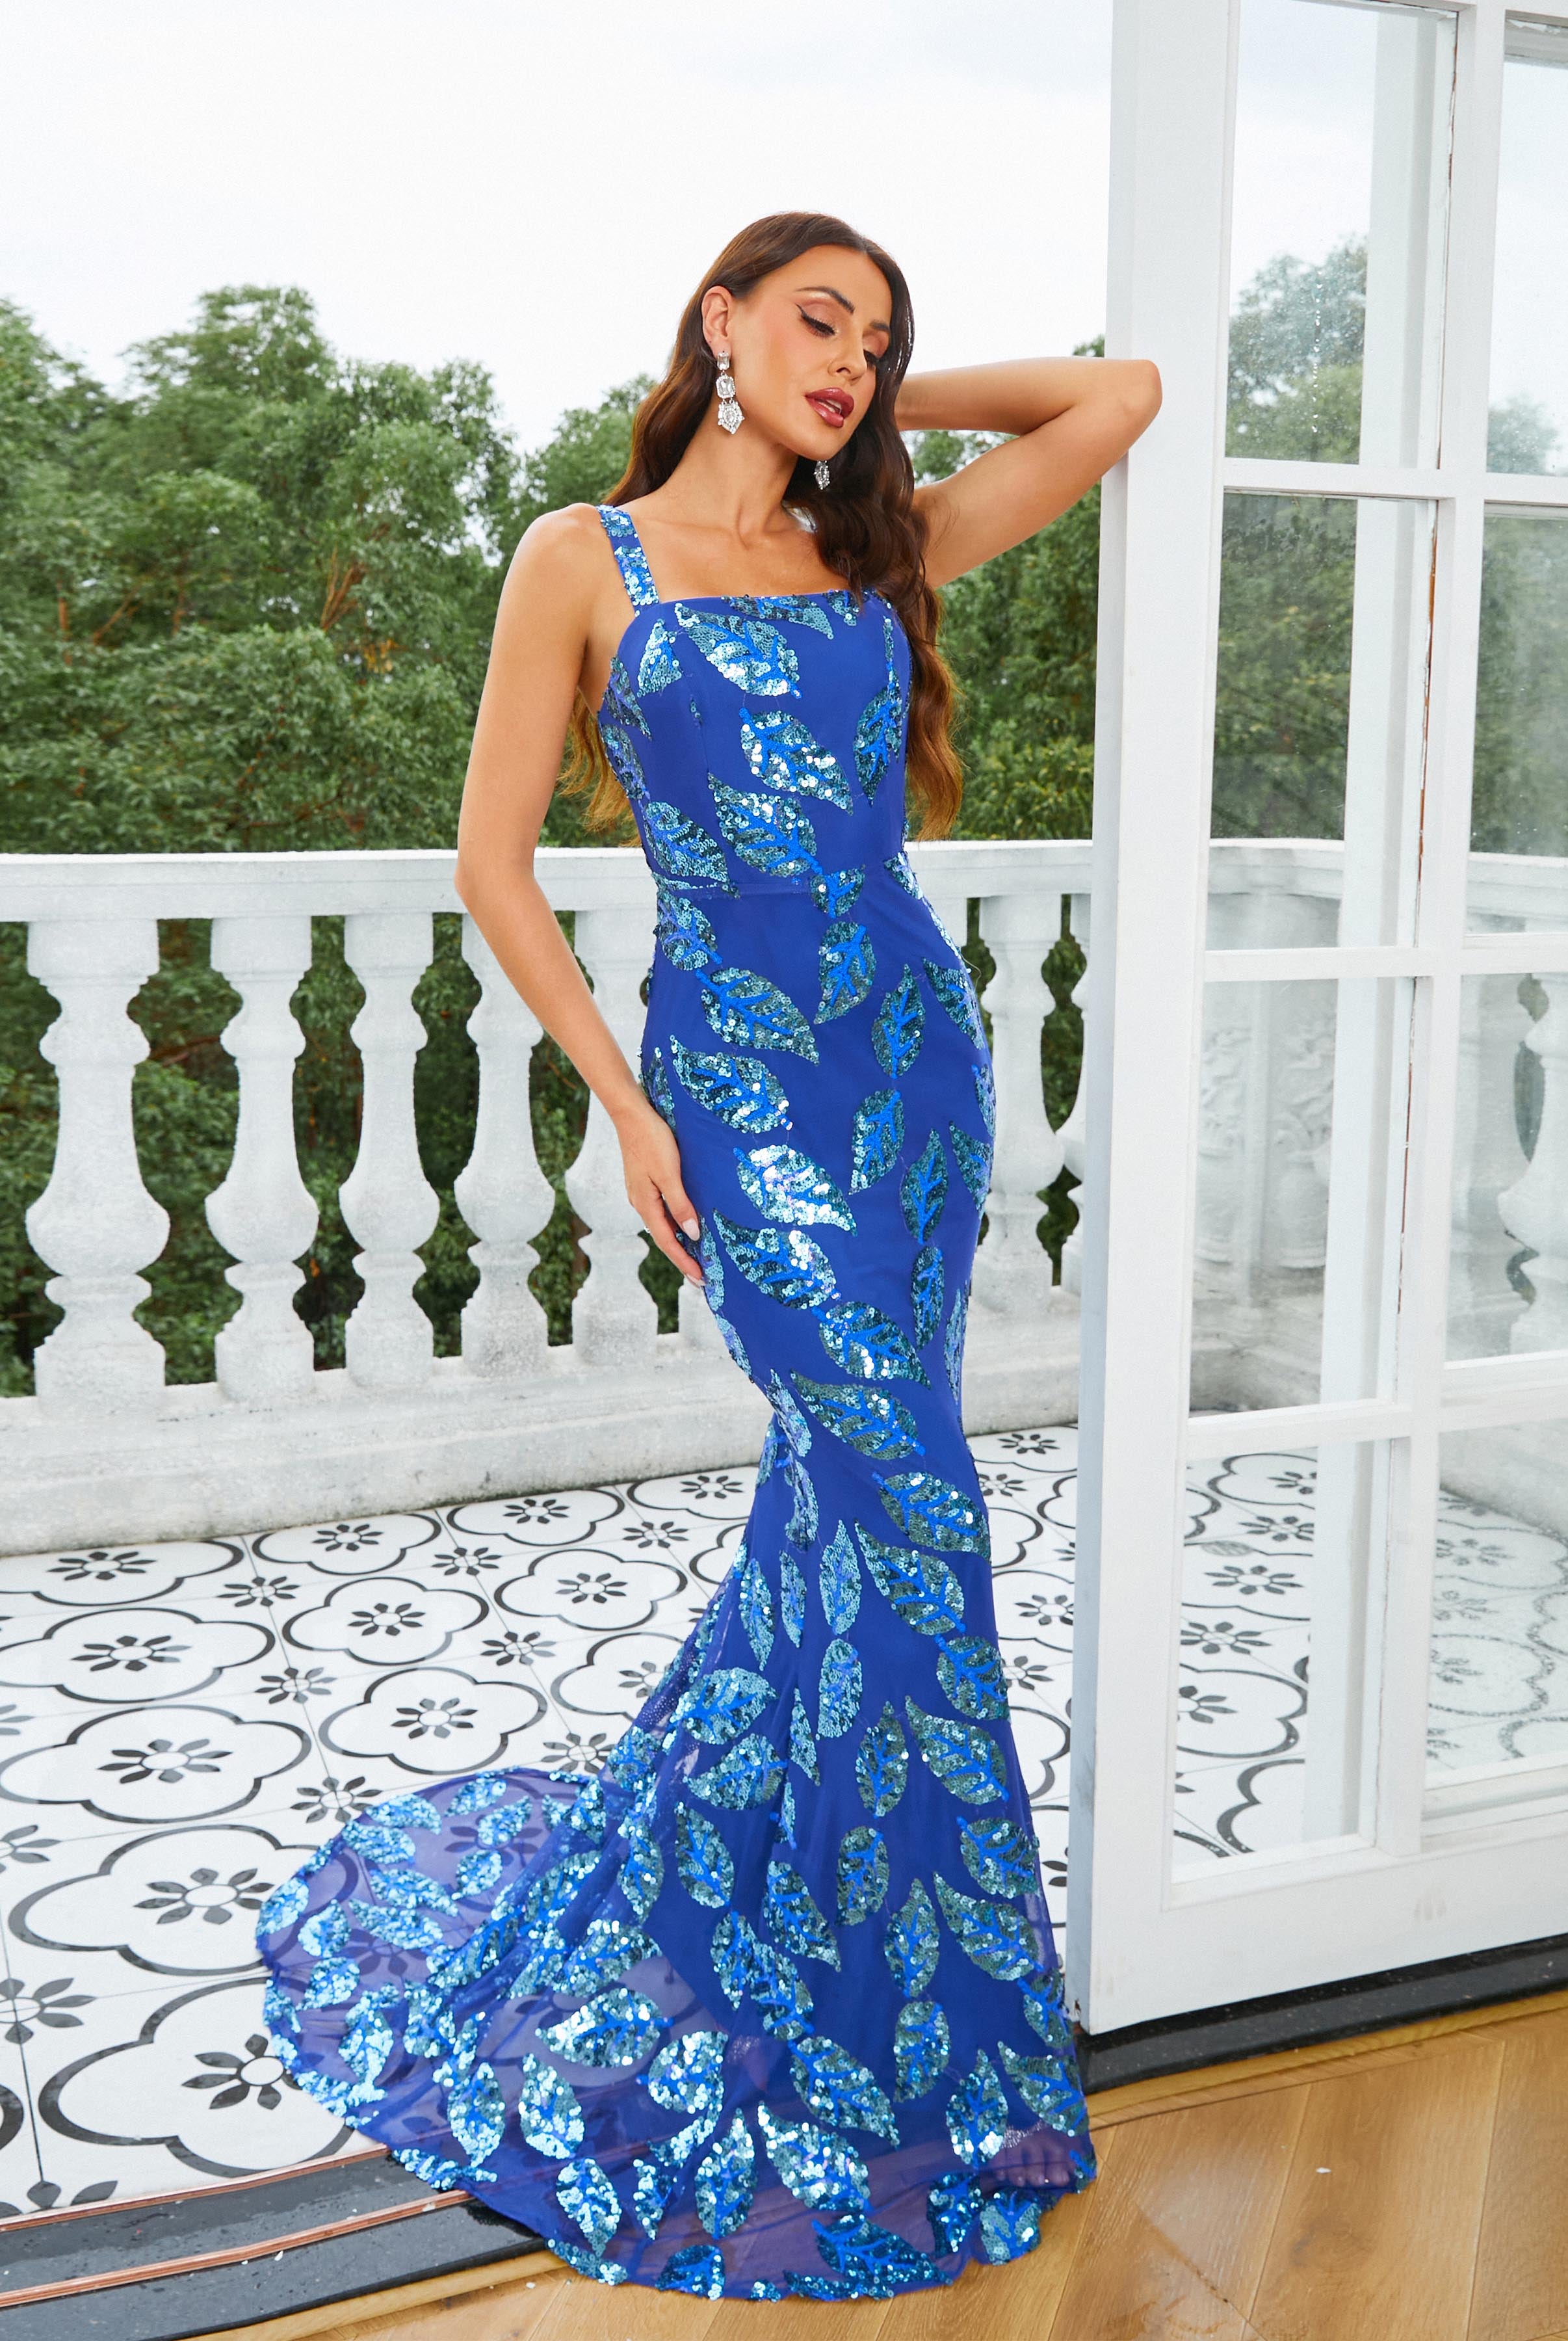 Formal Square Neck Sequin Mermaid Blue Evening Dress RM21009